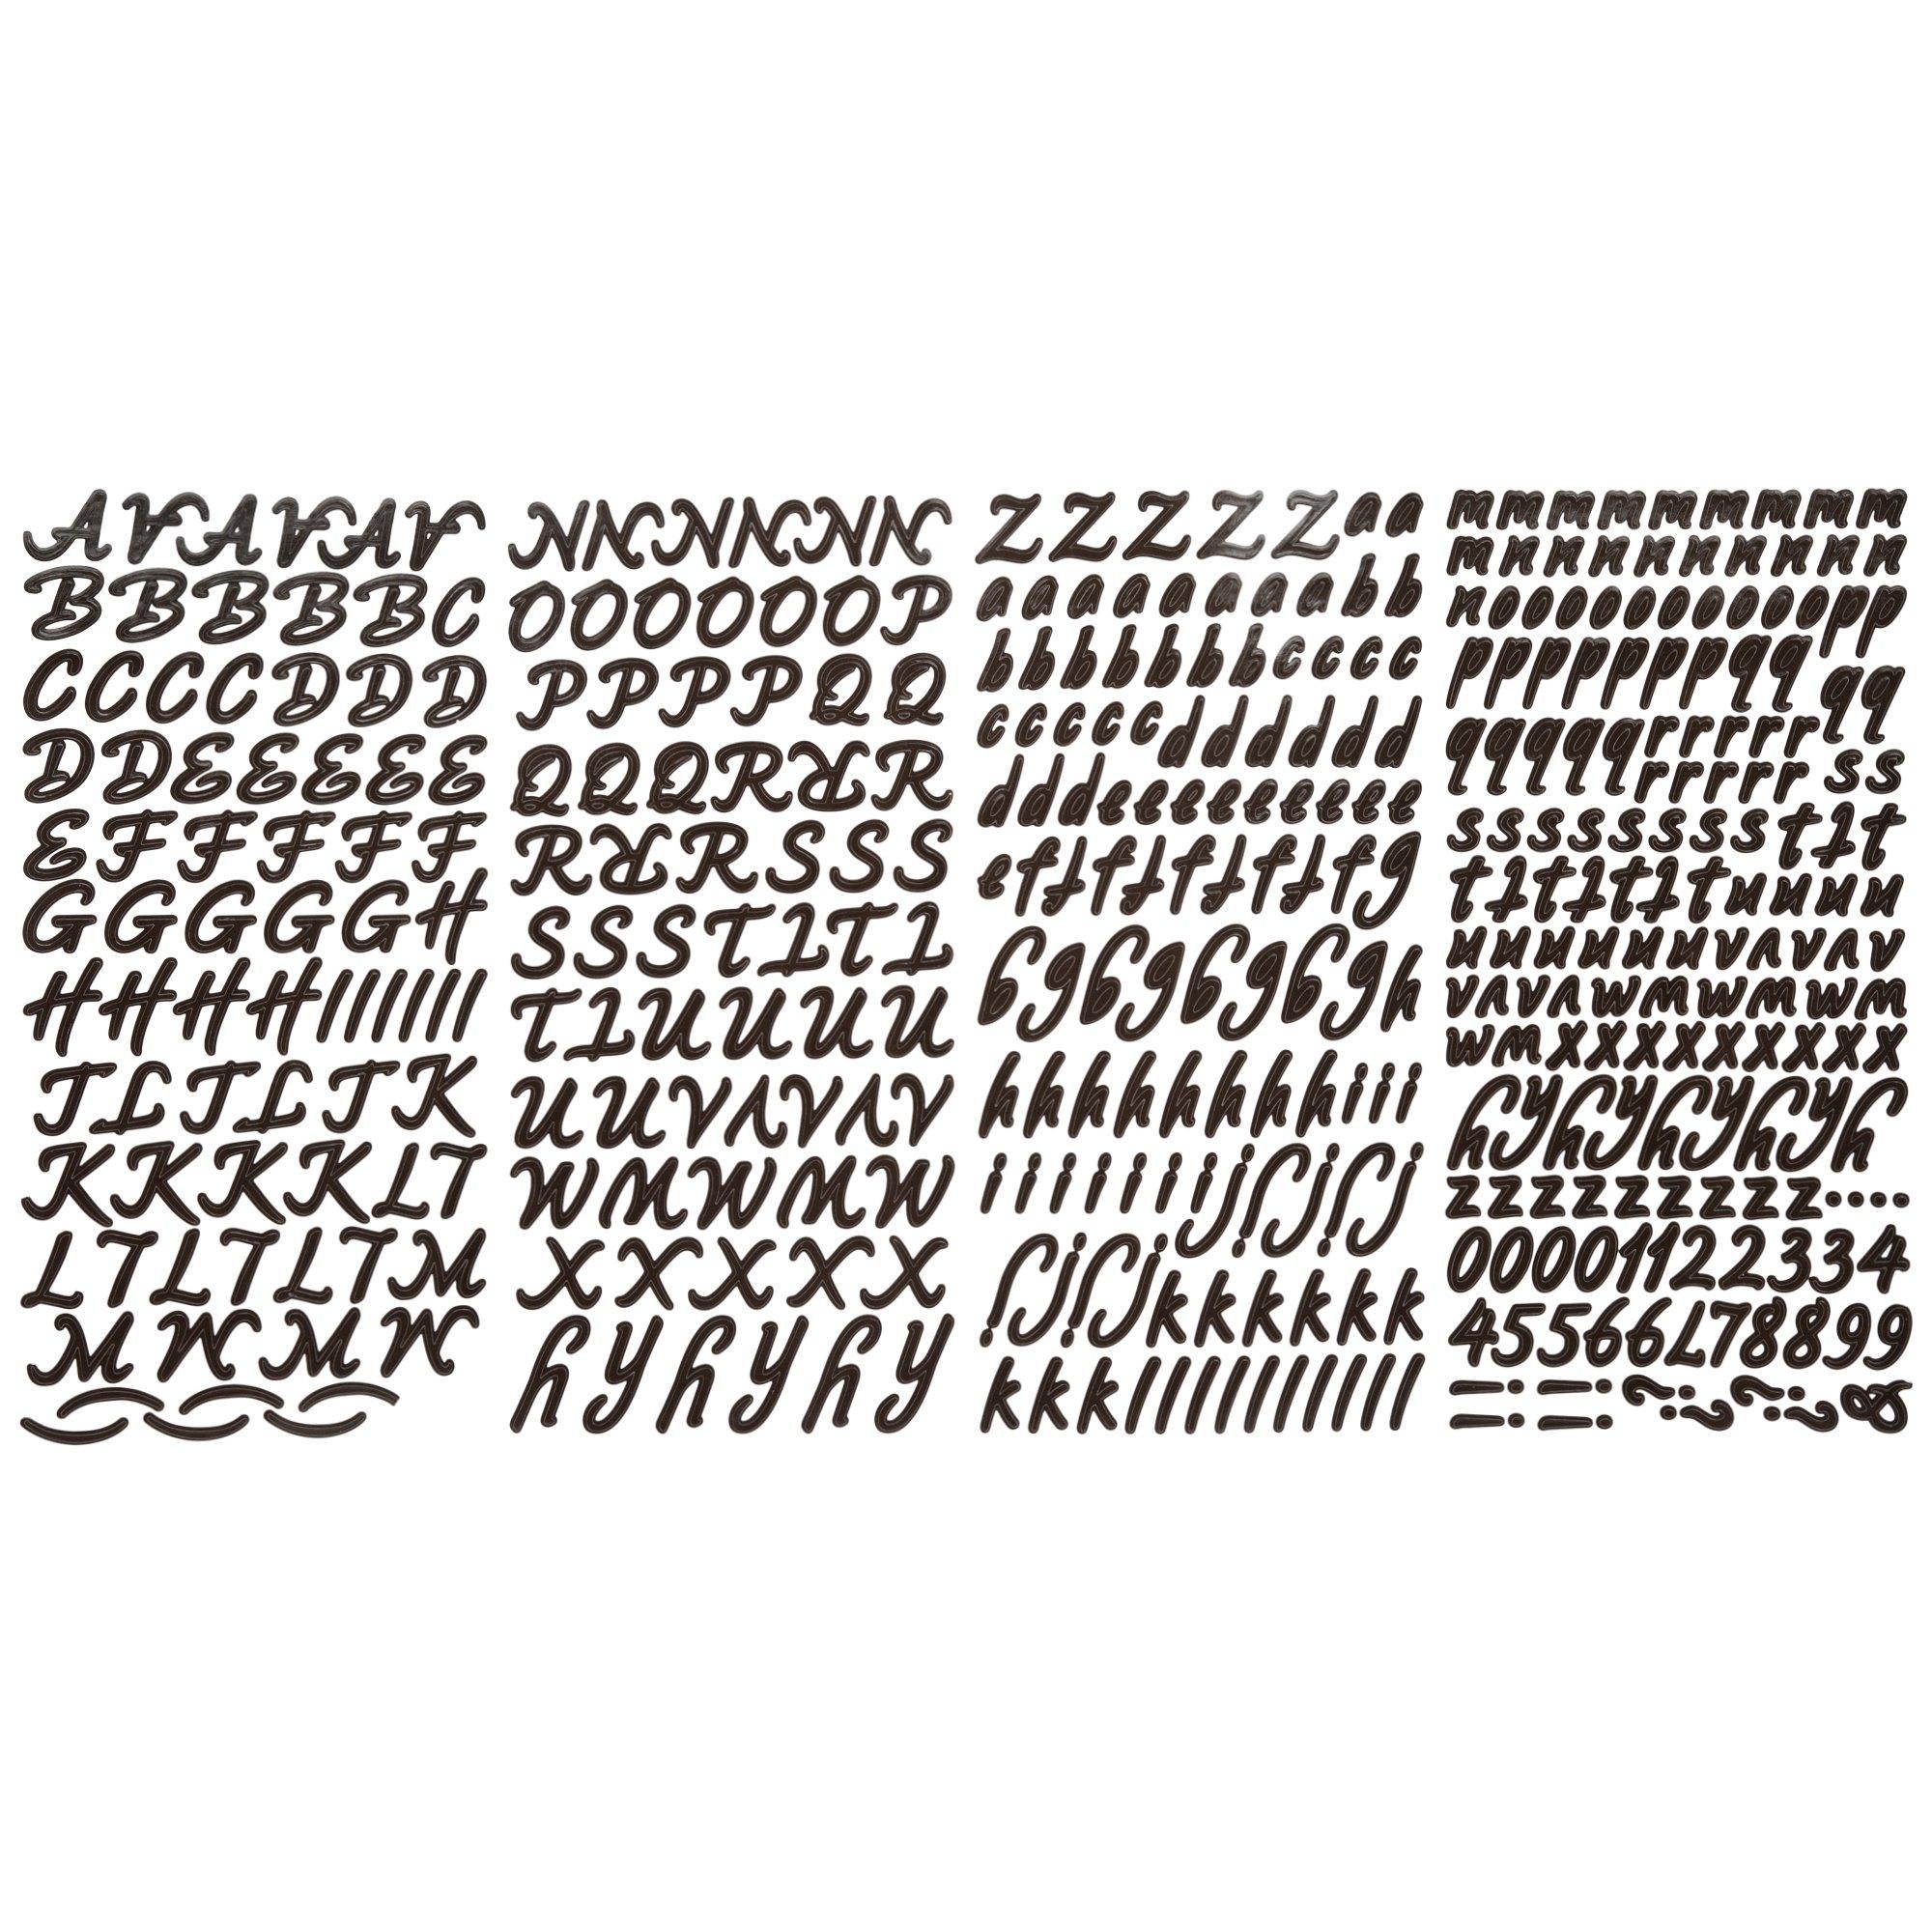 Script Alphabet Stickers, Hobby Lobby